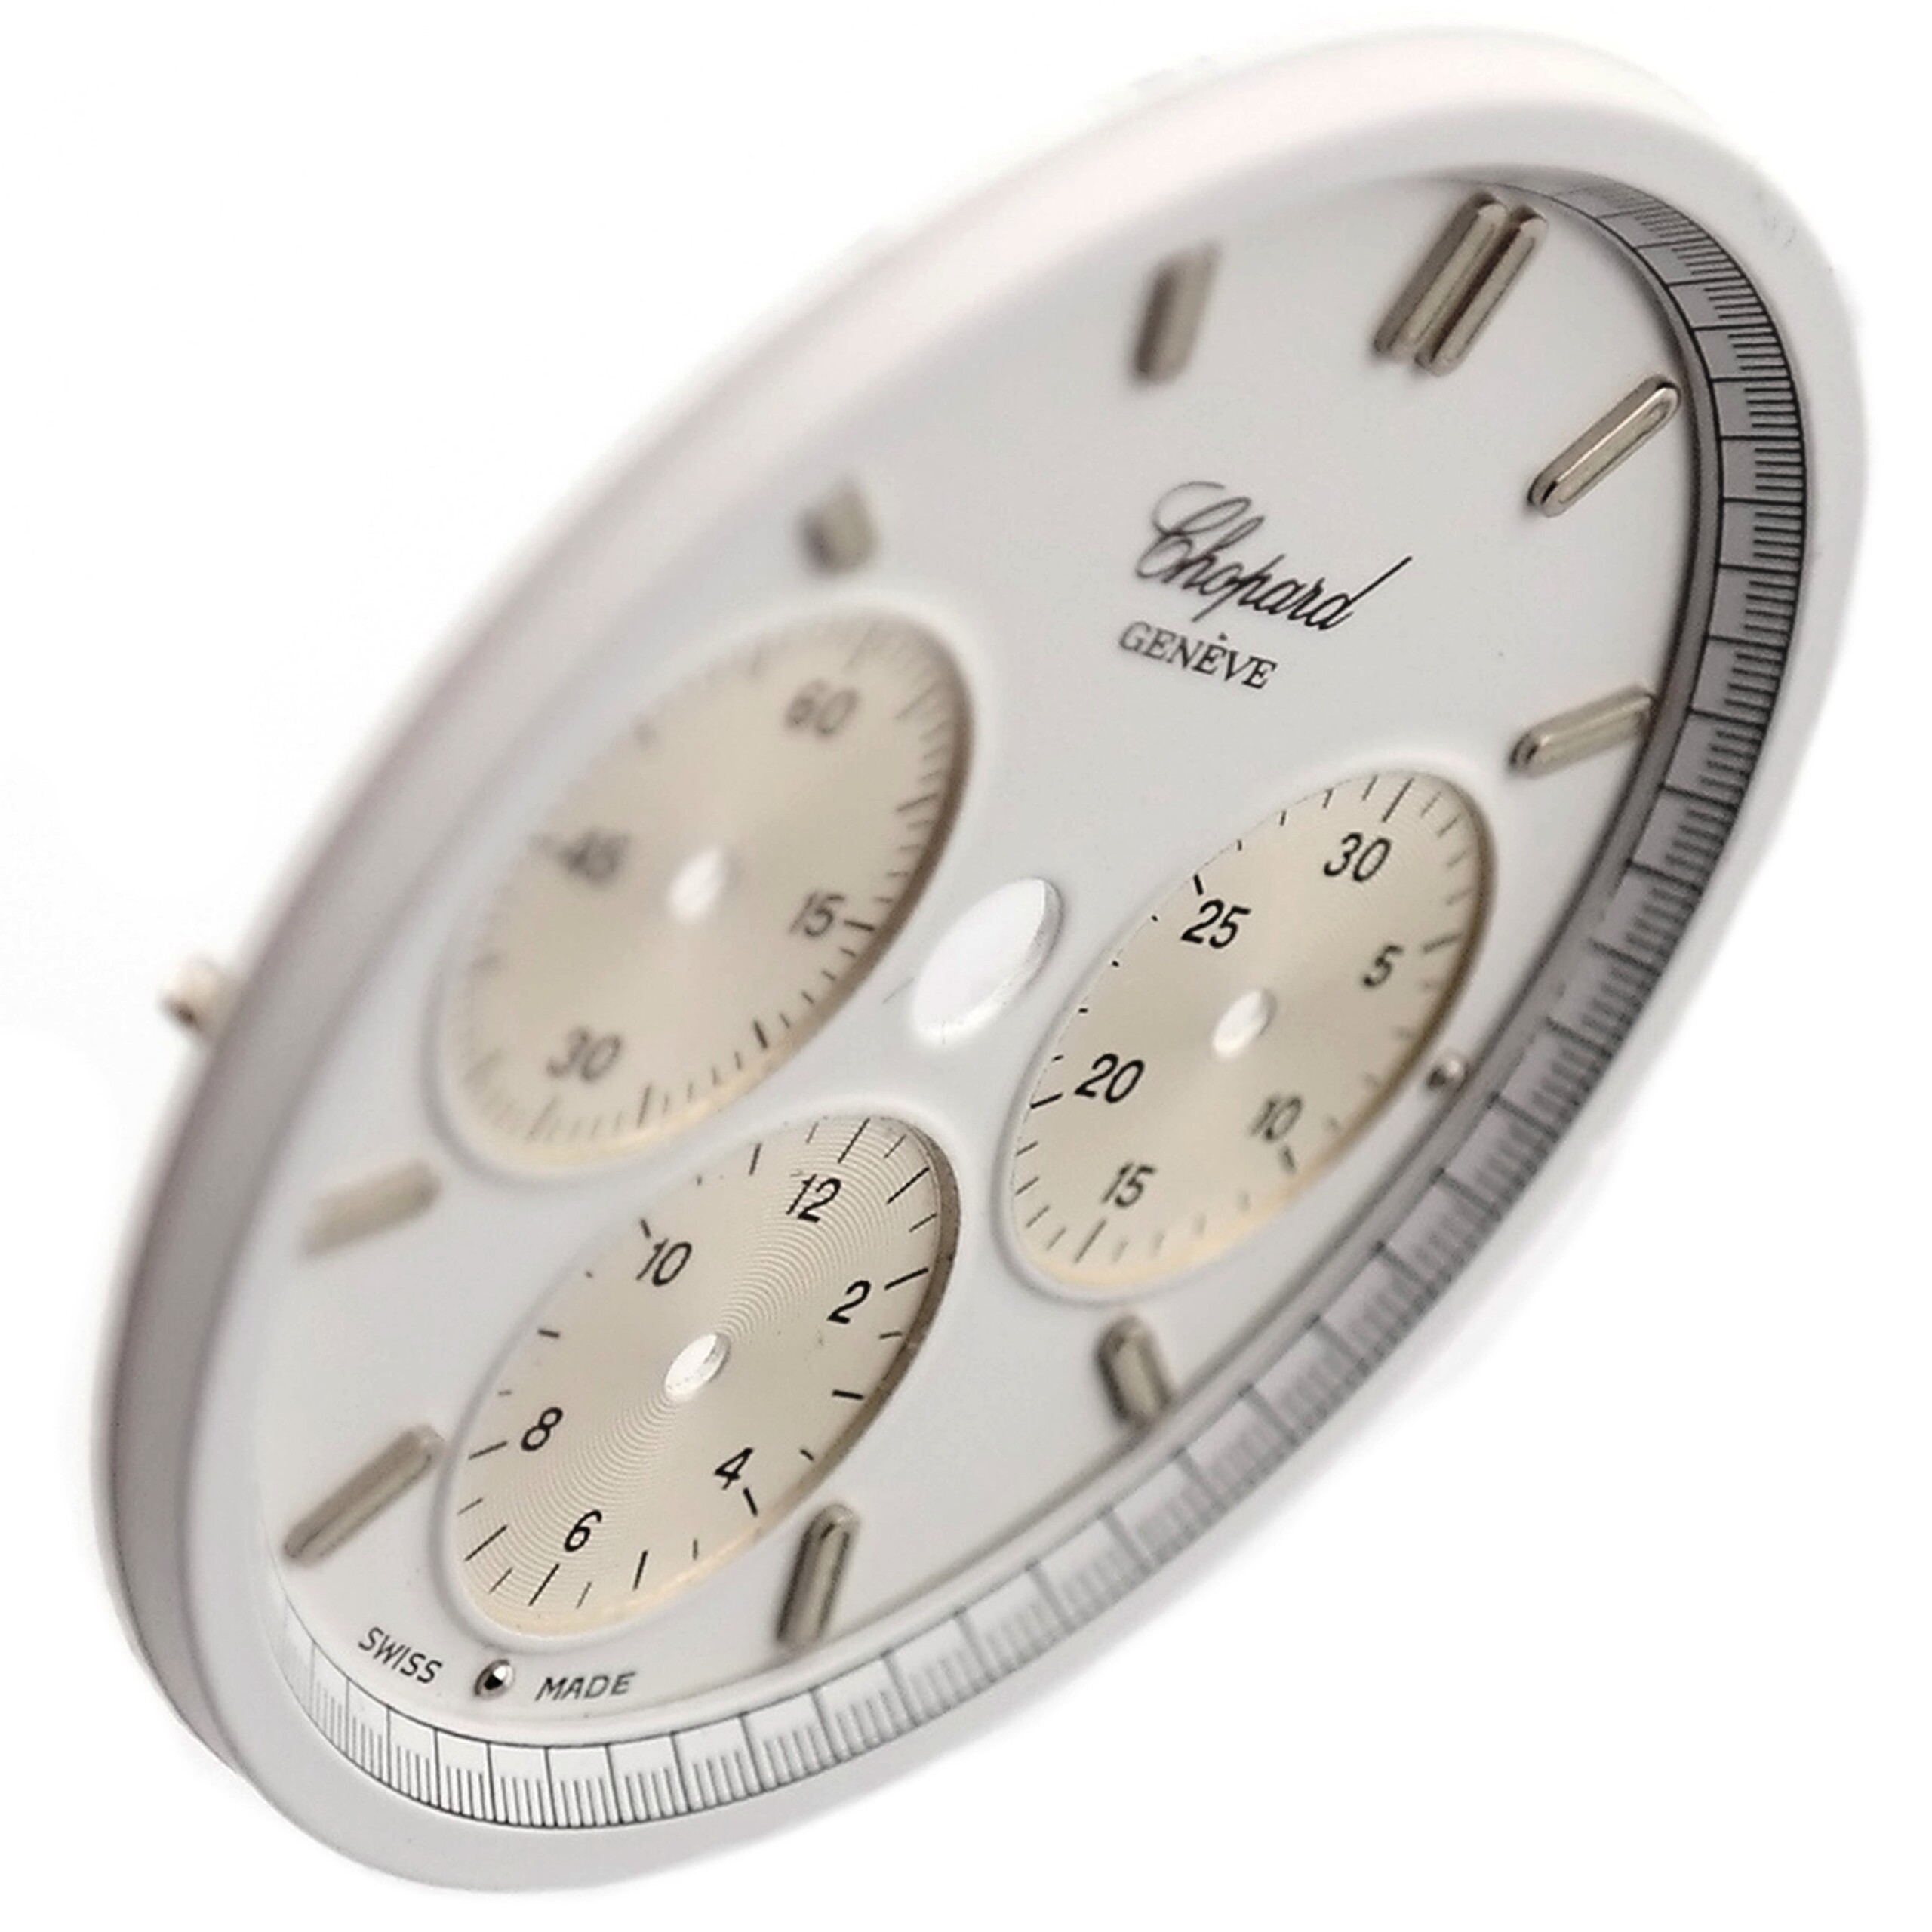 CHOPARD - Mille Miglia 1990s - Ref. 8179 -  Watch Dial